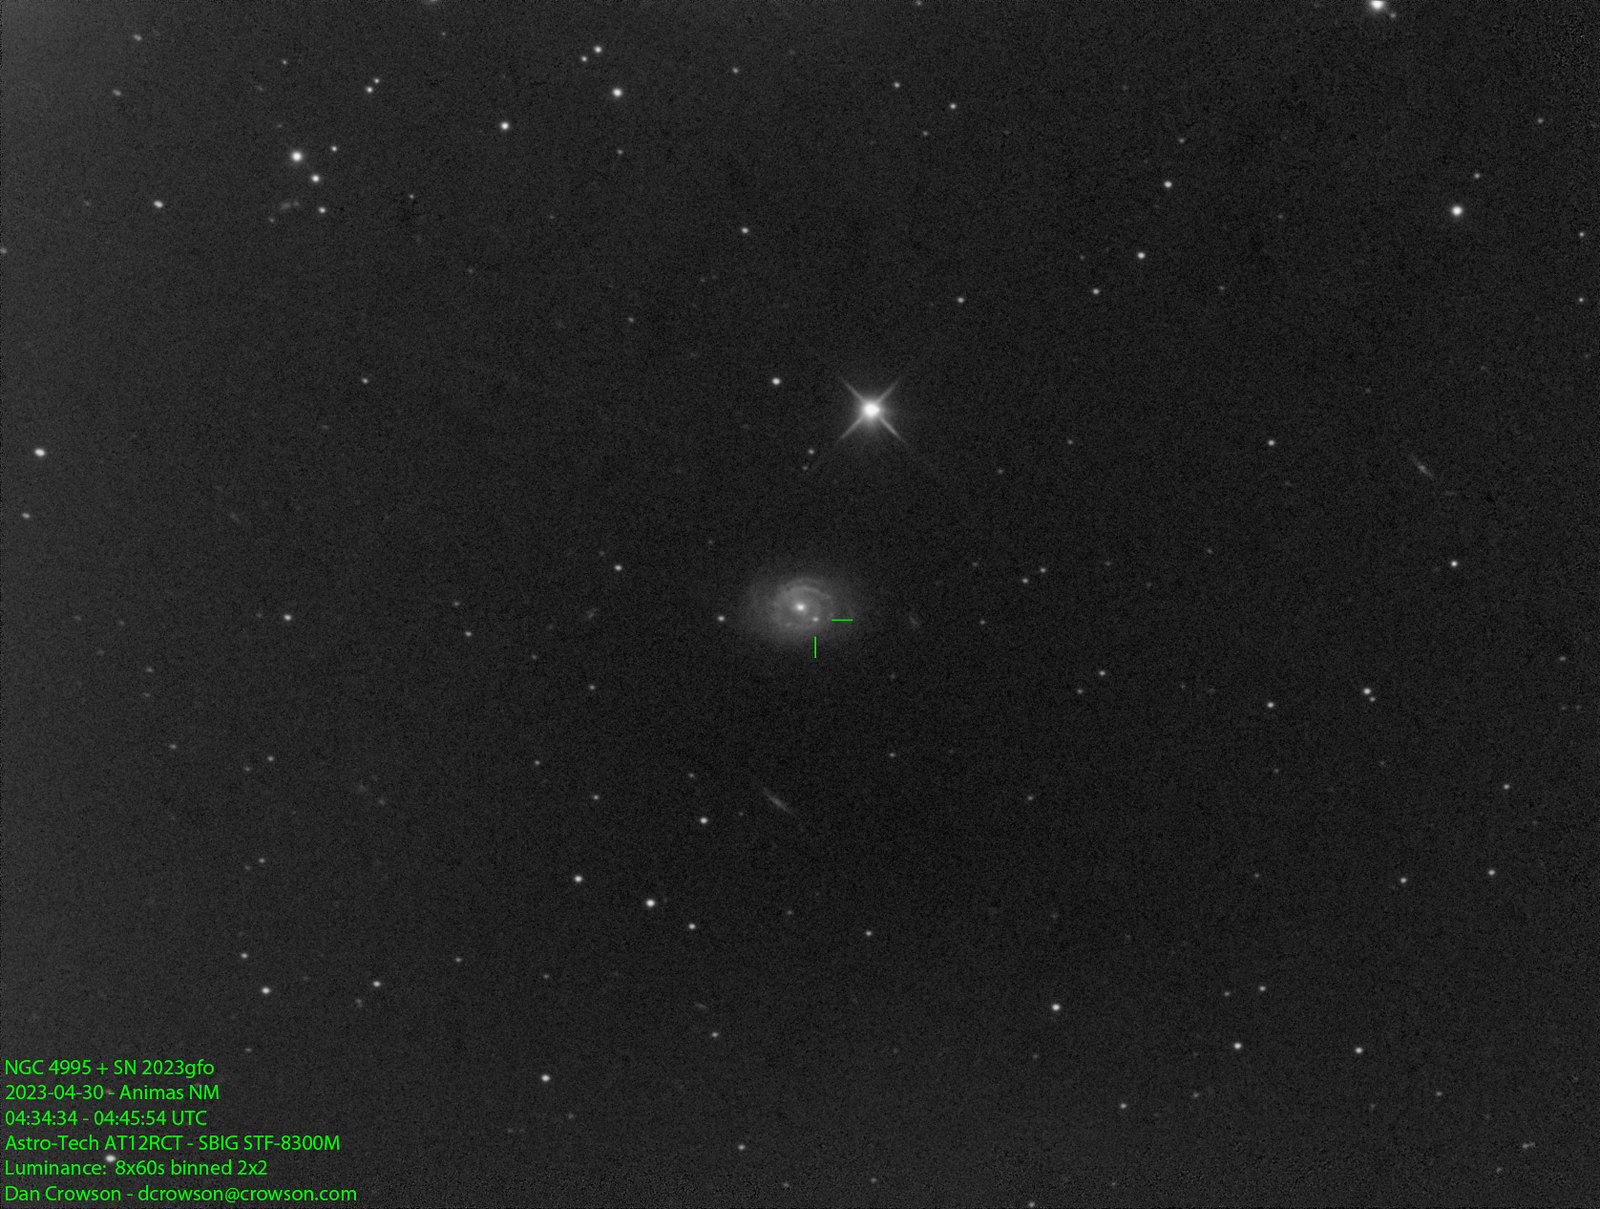 NGC 4995 + SN 2023gfo - 2x2 - 8x60s - Luminance